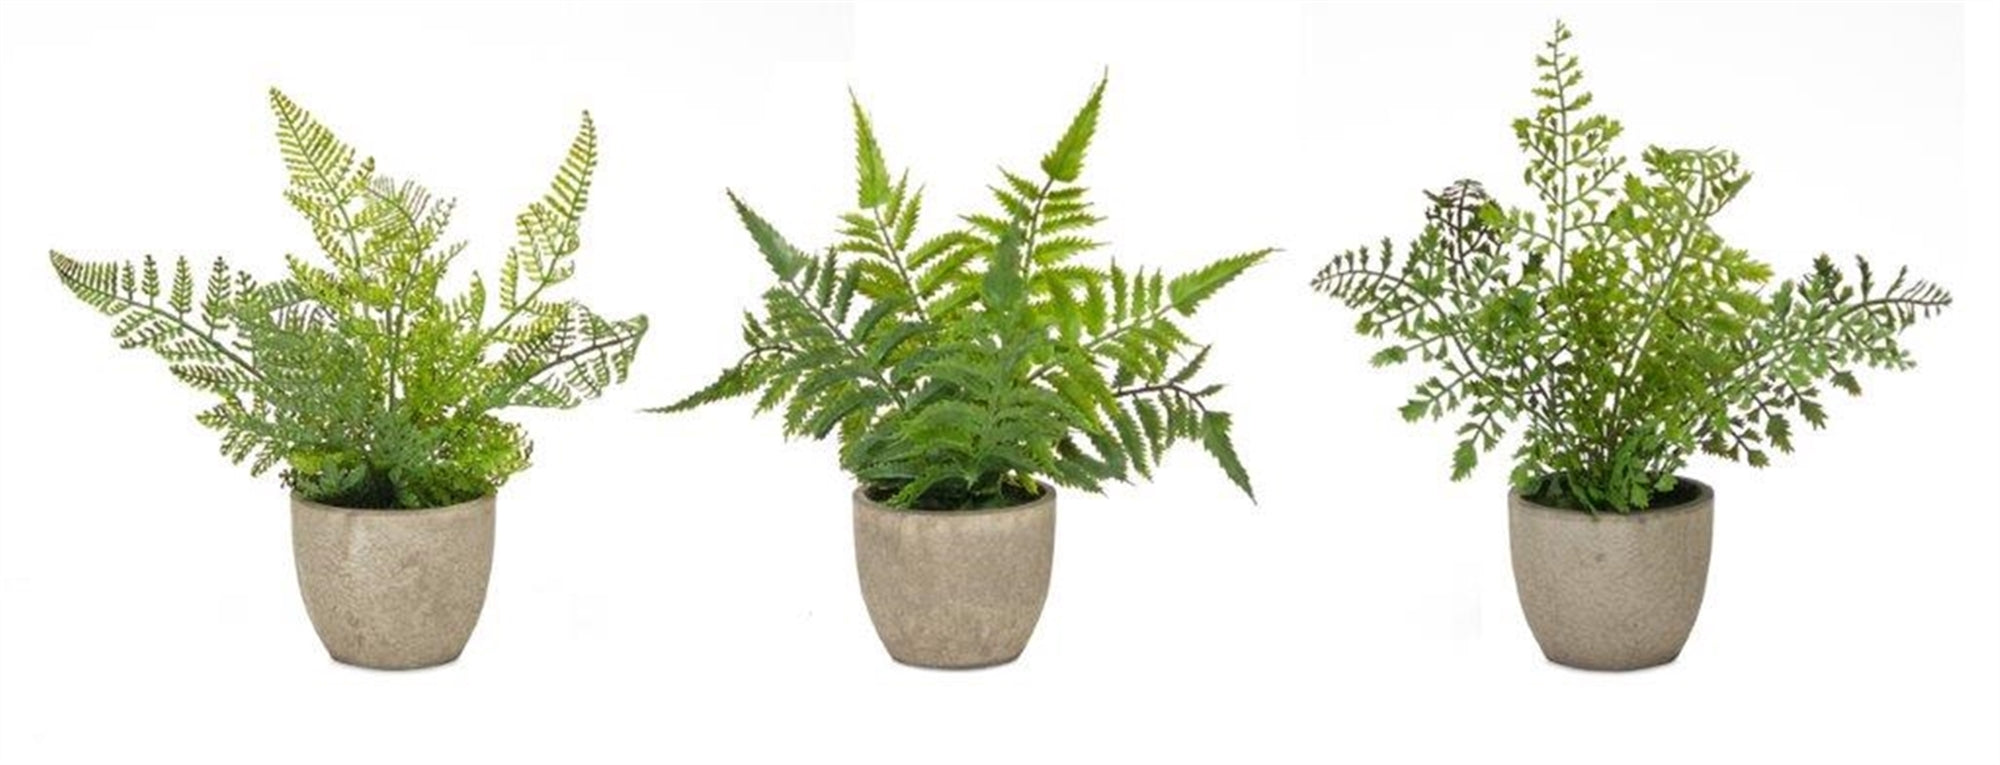 Potted Ferns (Set of 3)